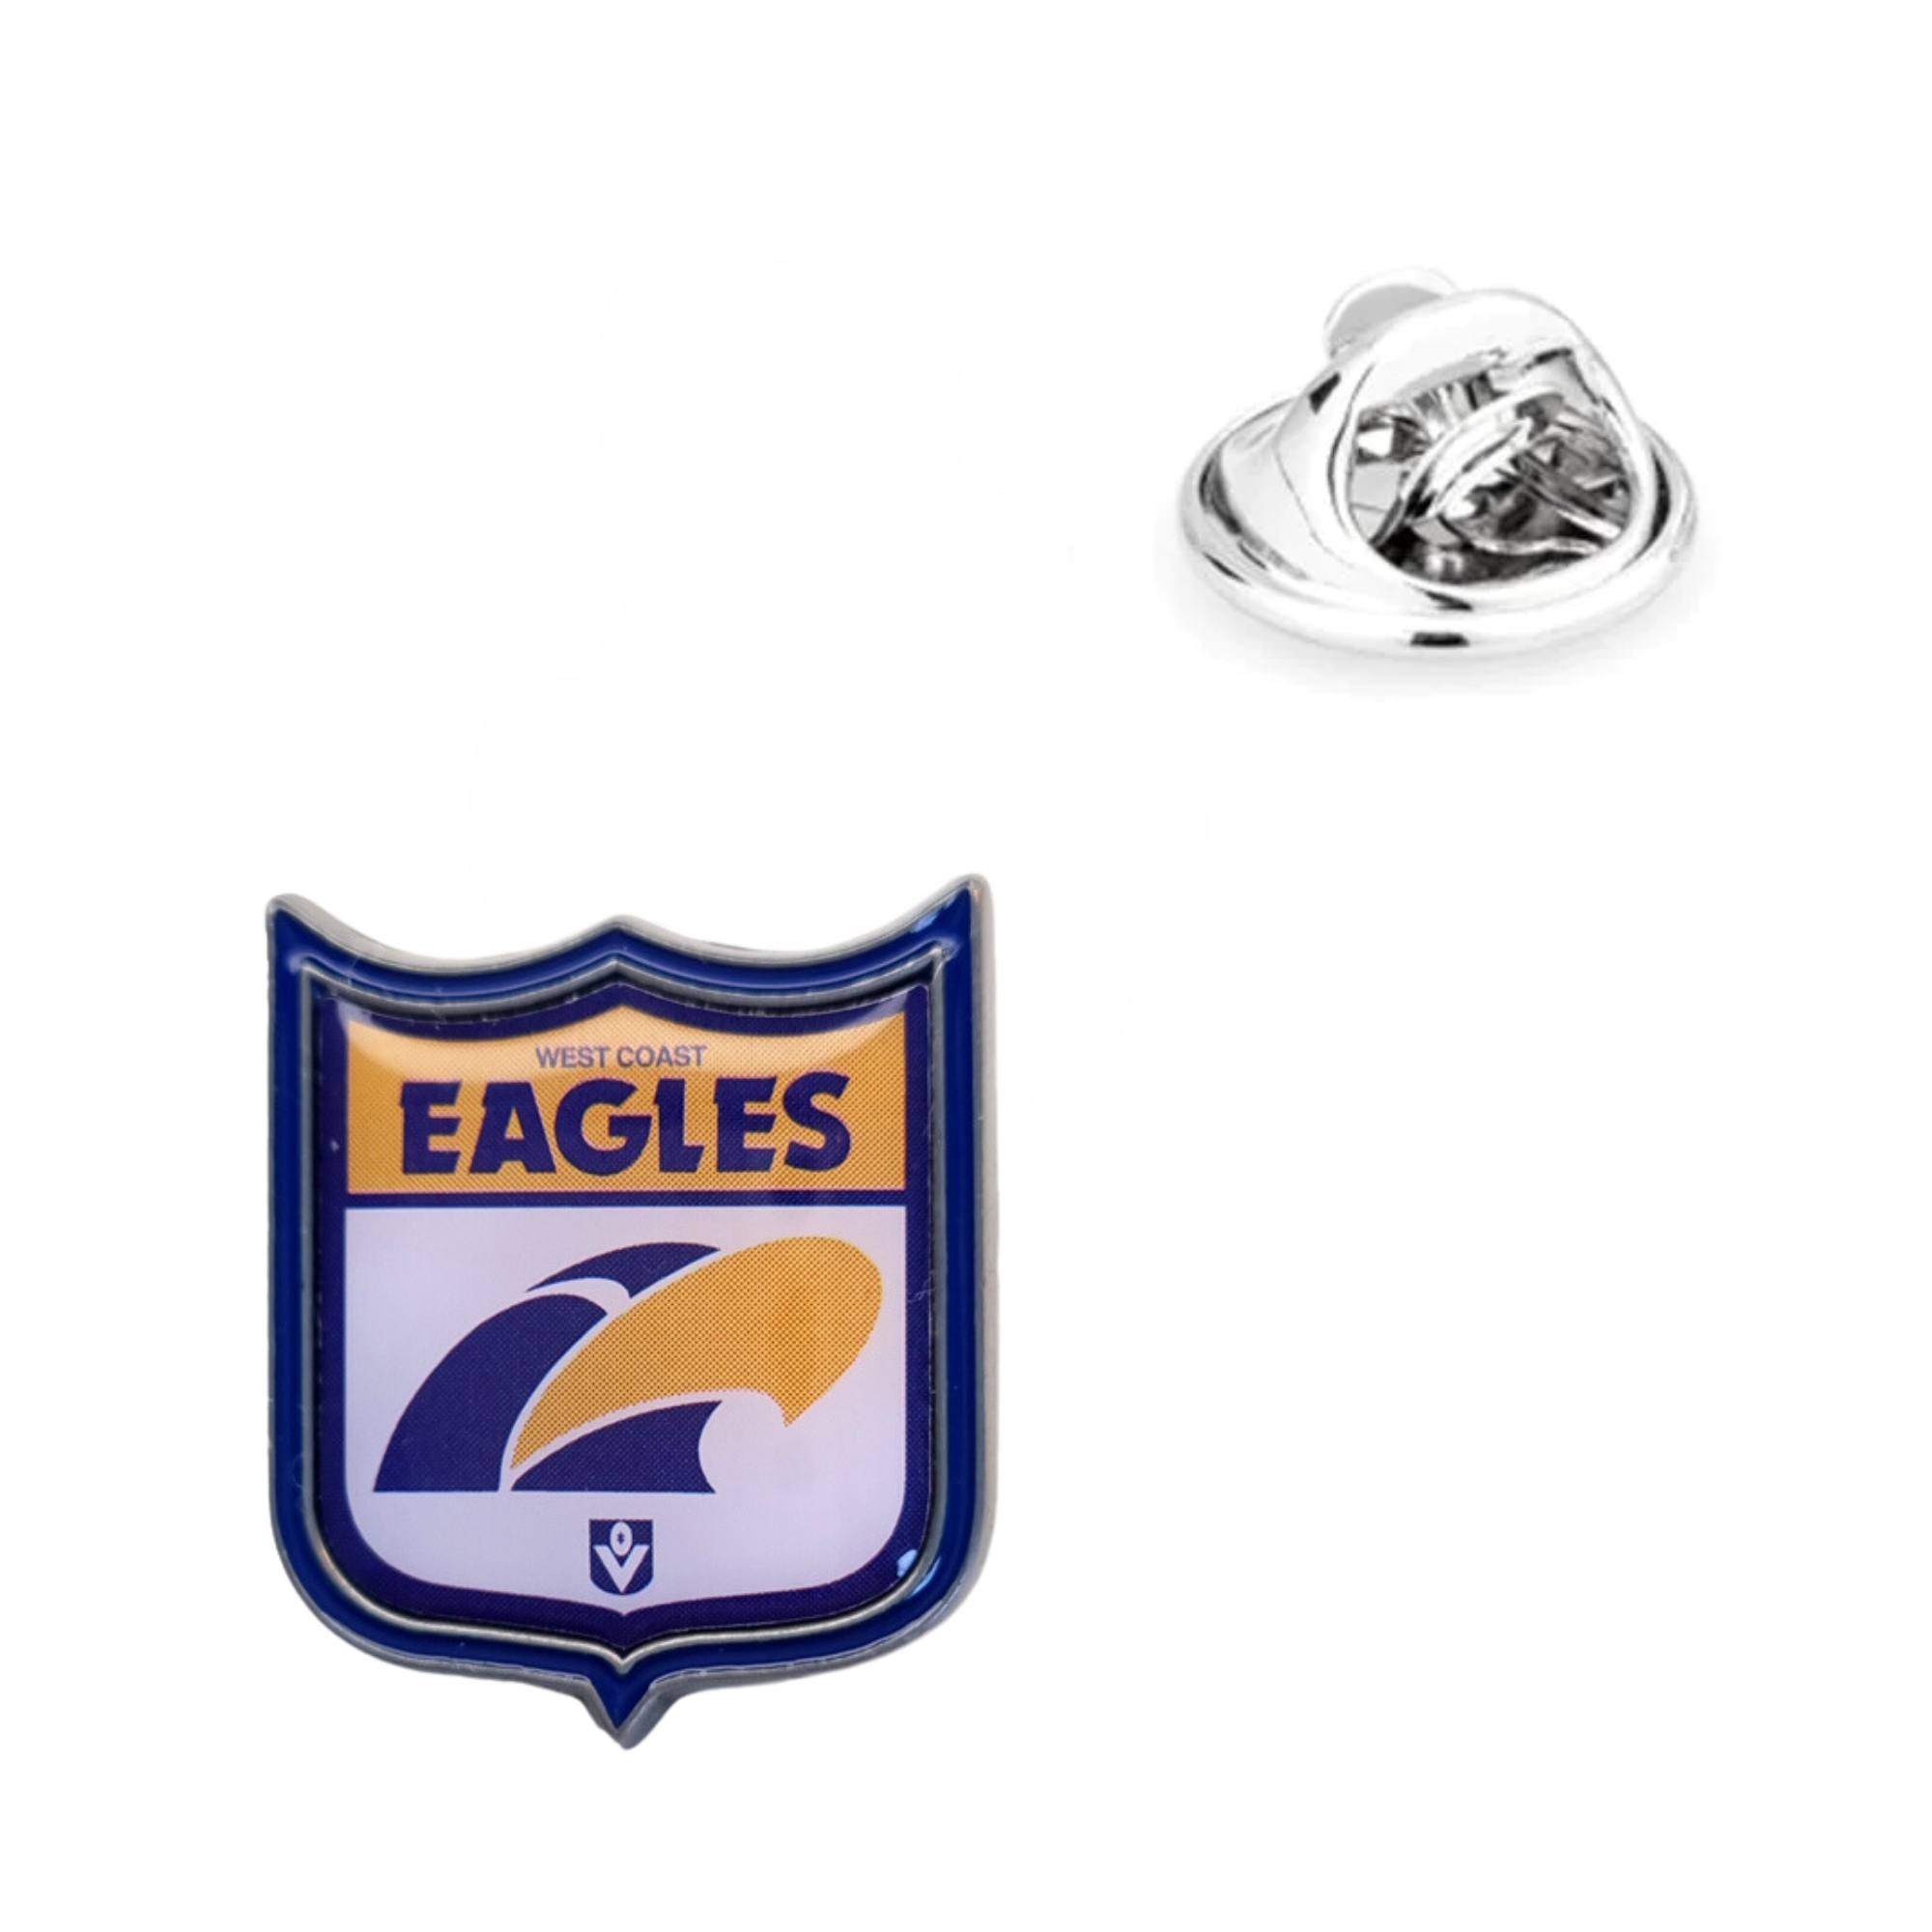 West Coast Eagles AFL Heritage Pin